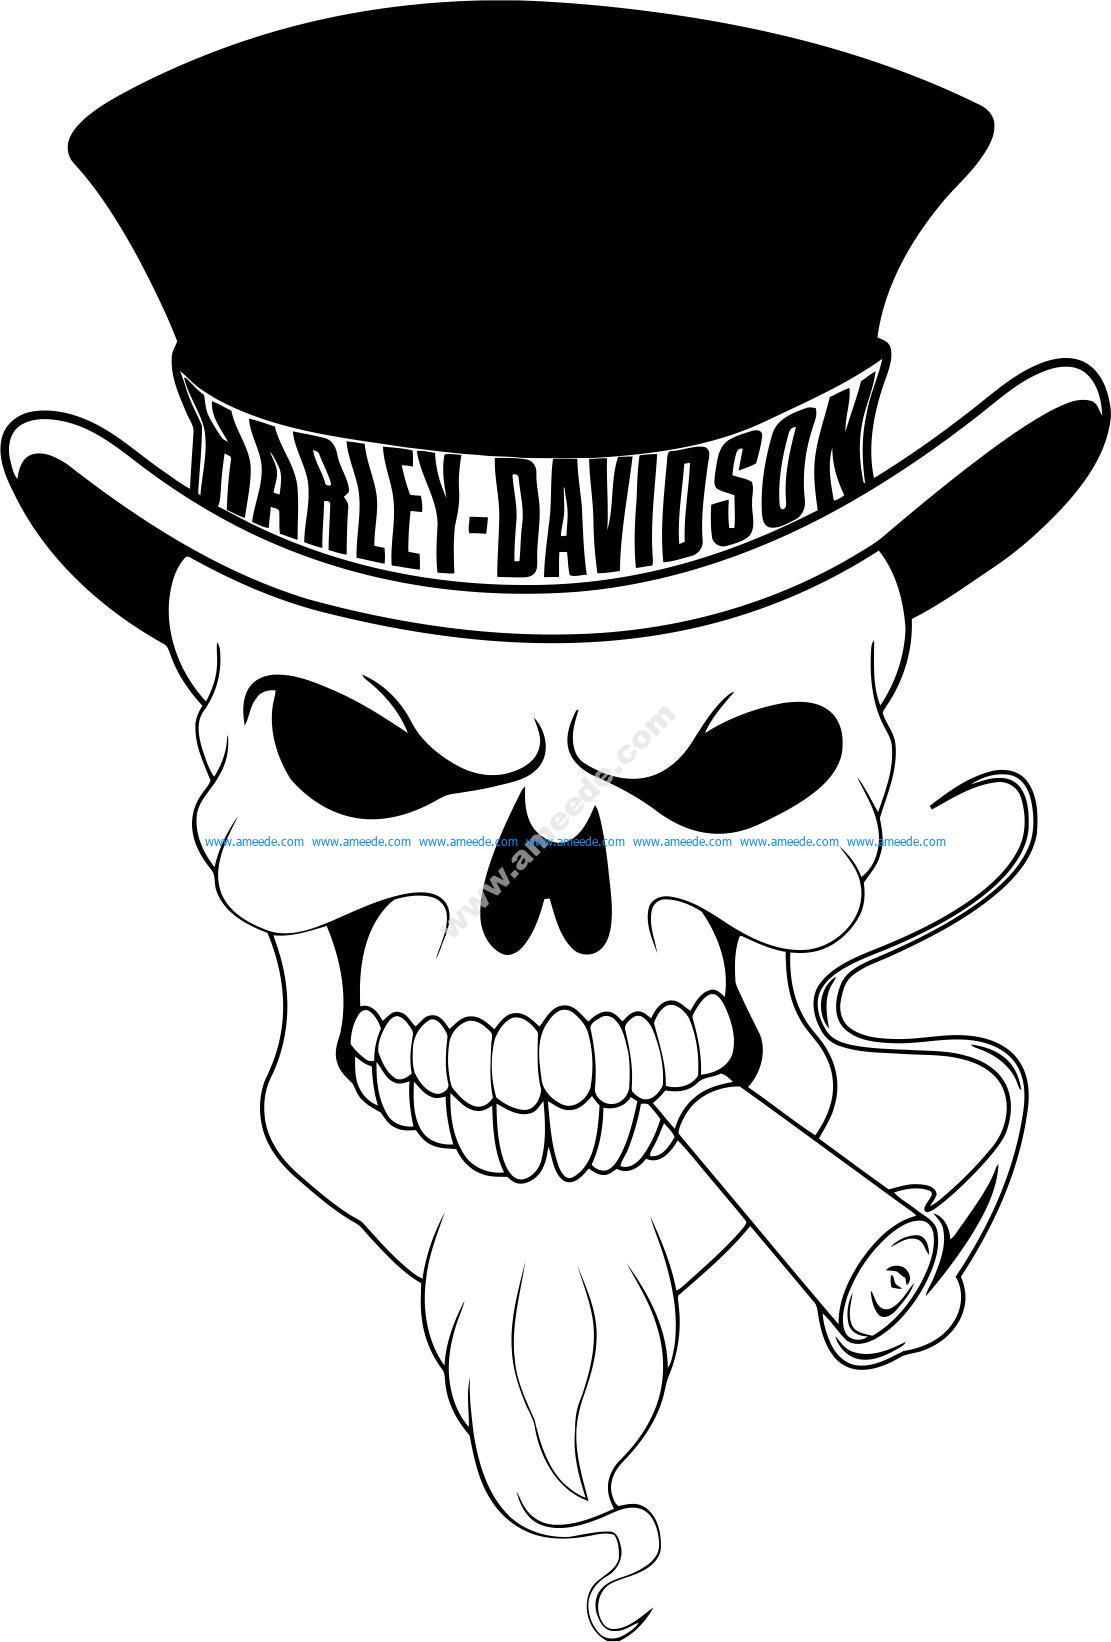 Harley Davidson Skull Vector – Free Download Vector Files